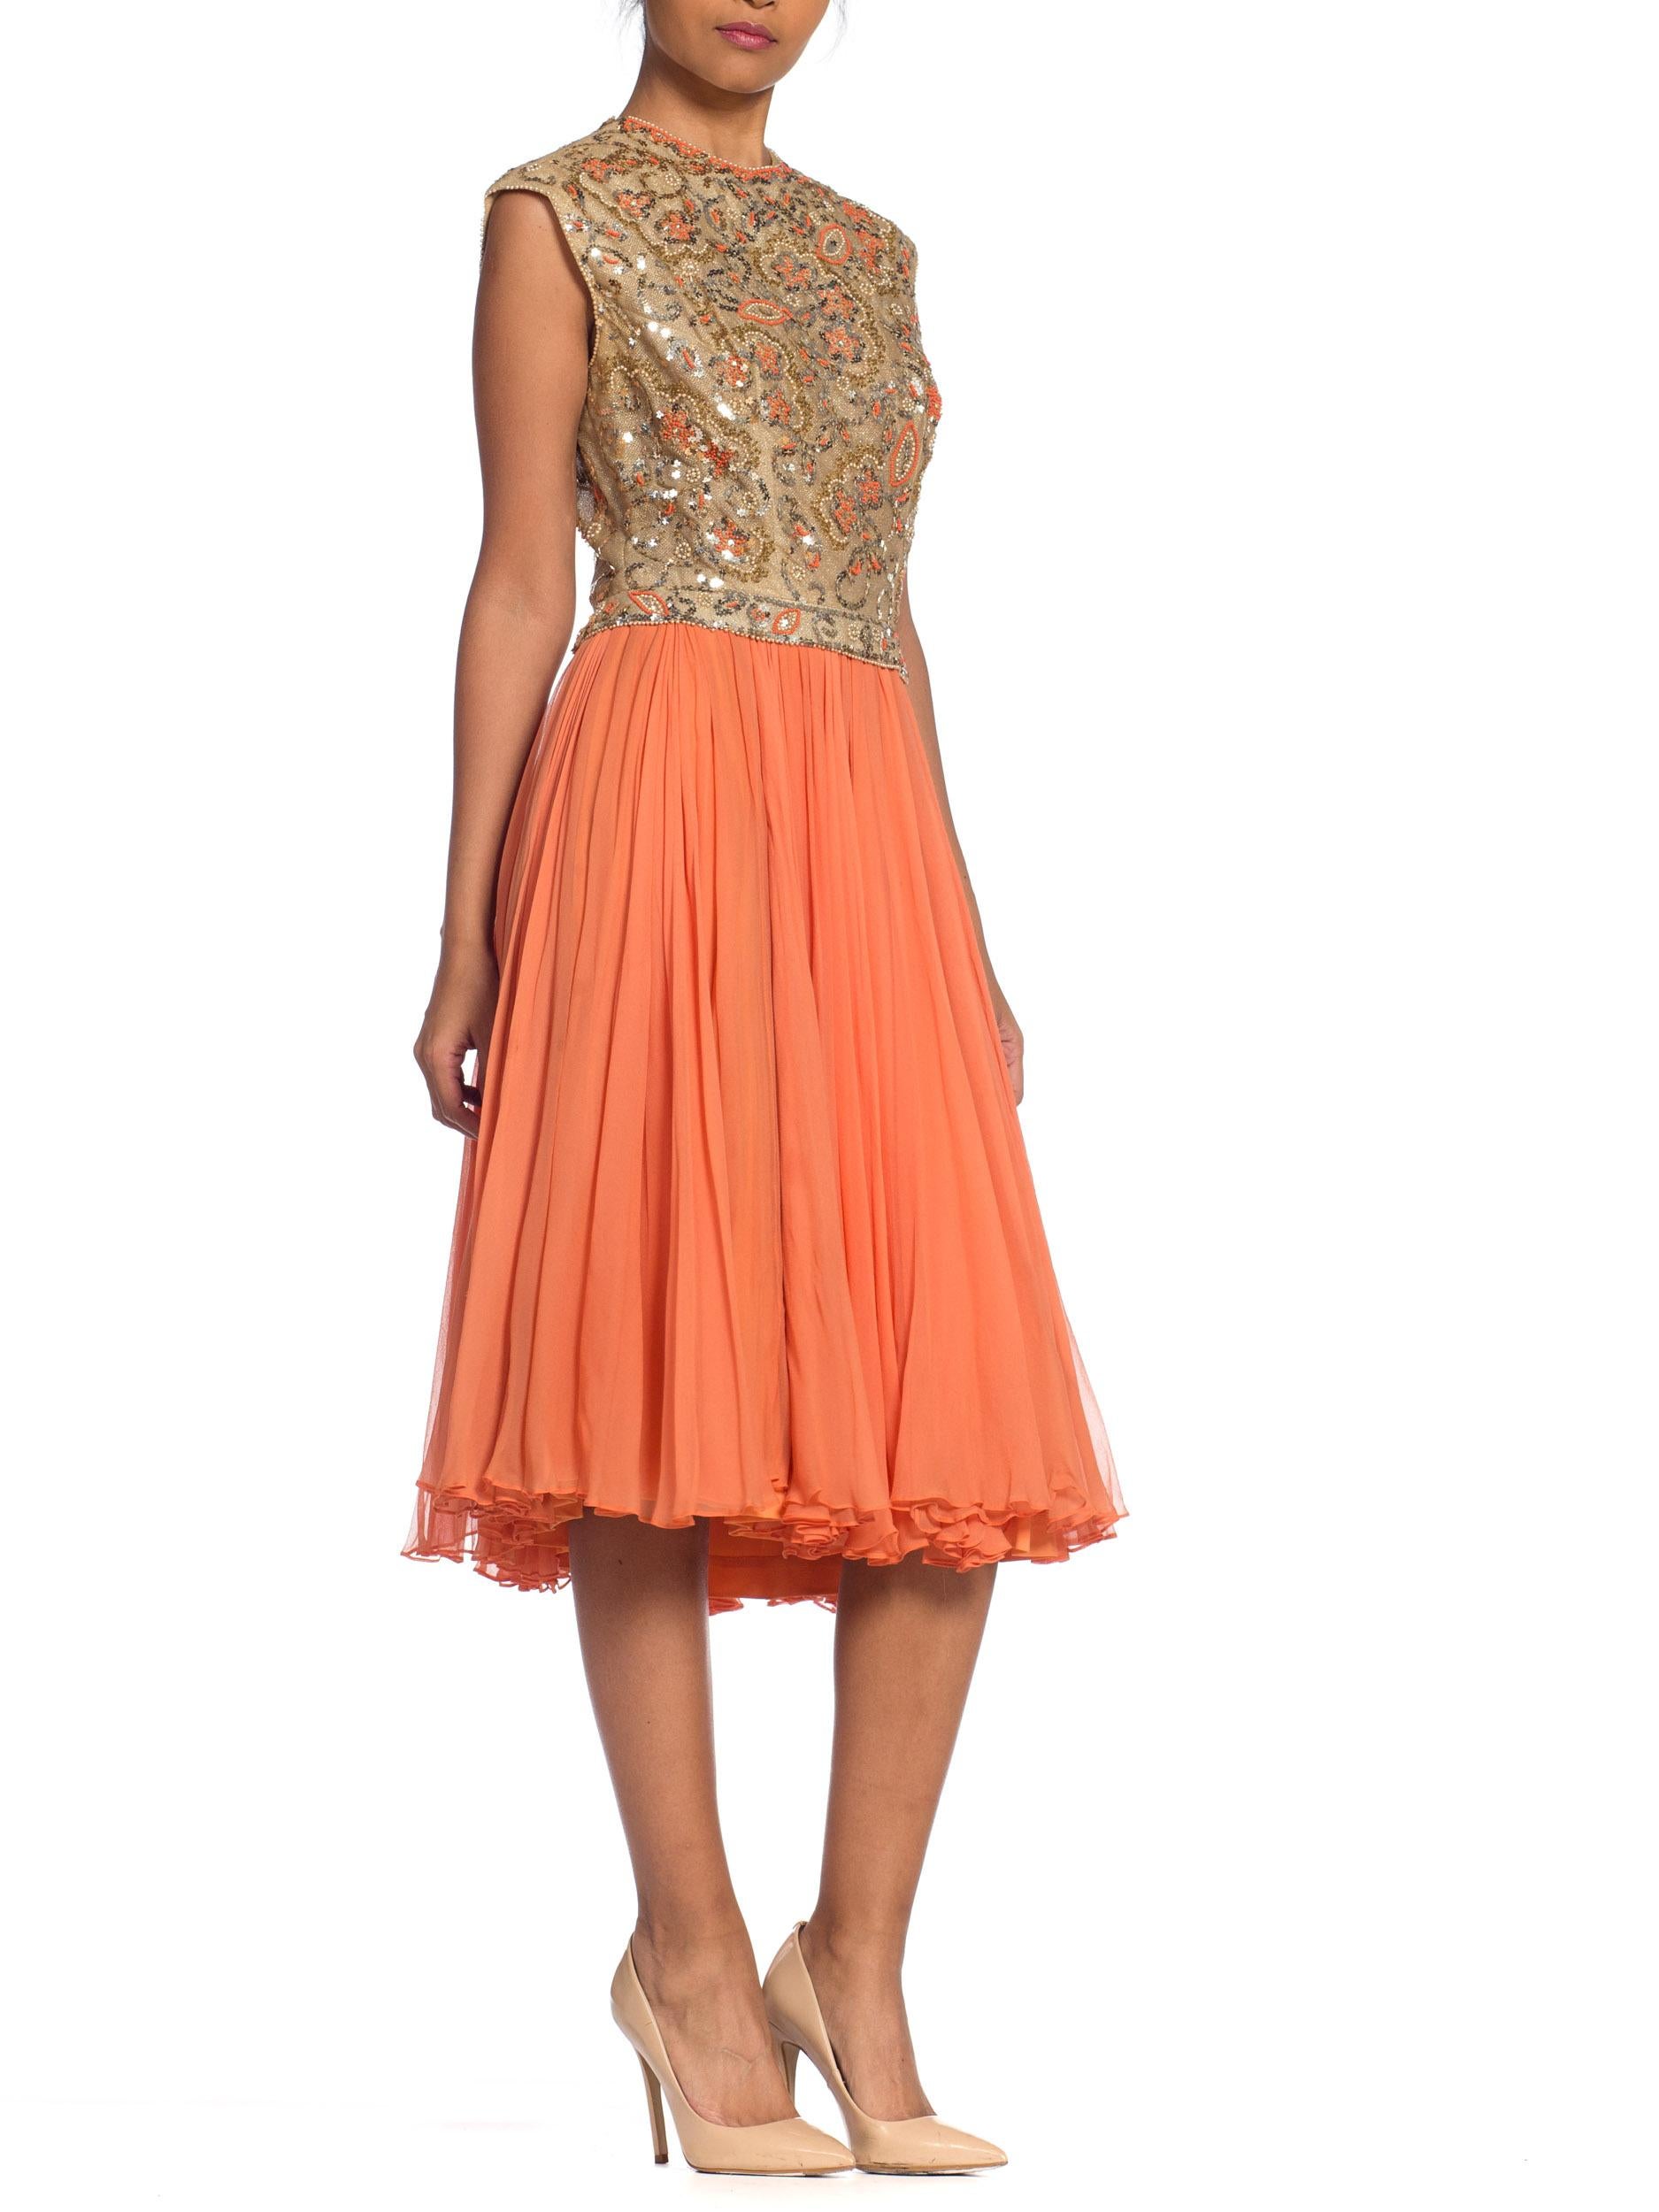 tangerine color dress